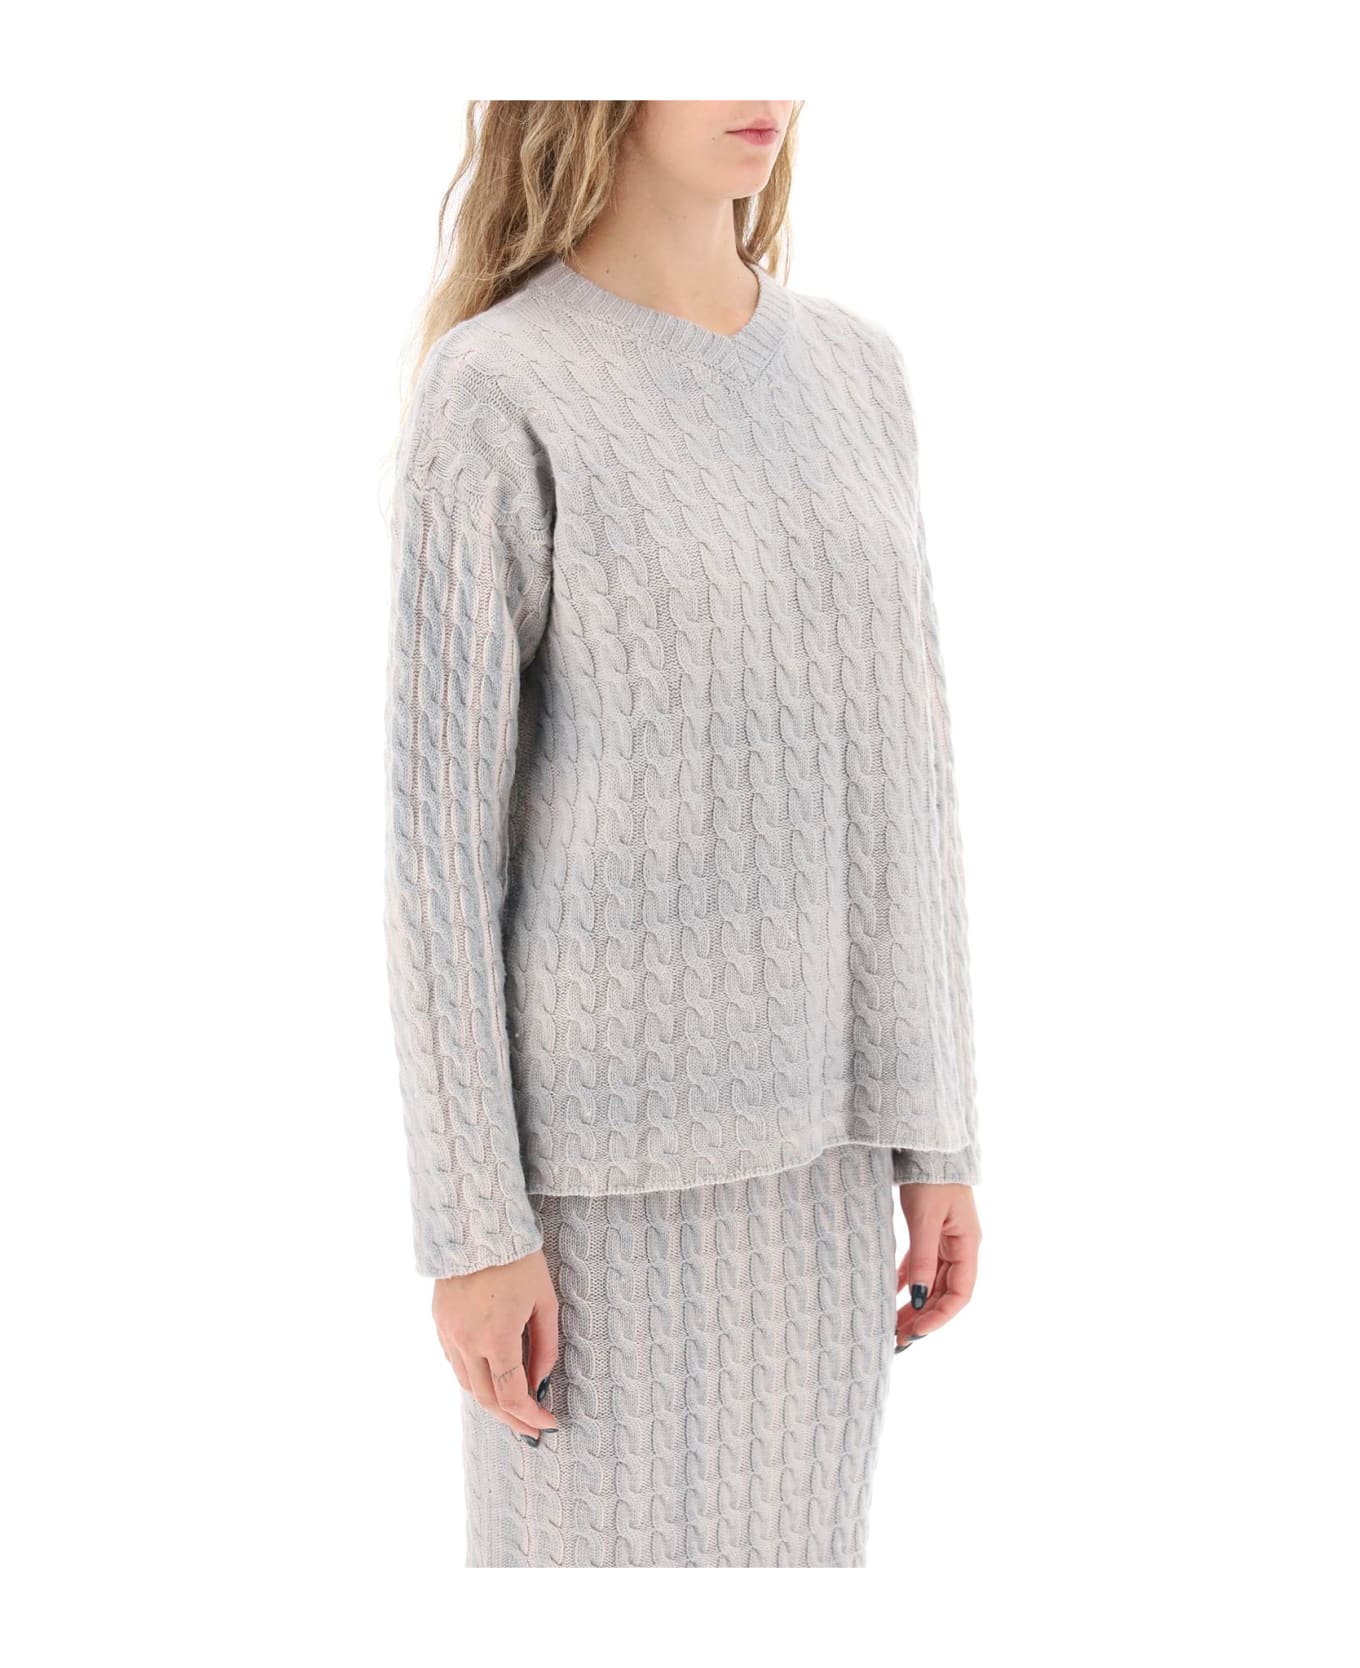 Paloma Wool Ainhoa Cable Knit Sweater - GRIS MEDIO (Grey) ニットウェア